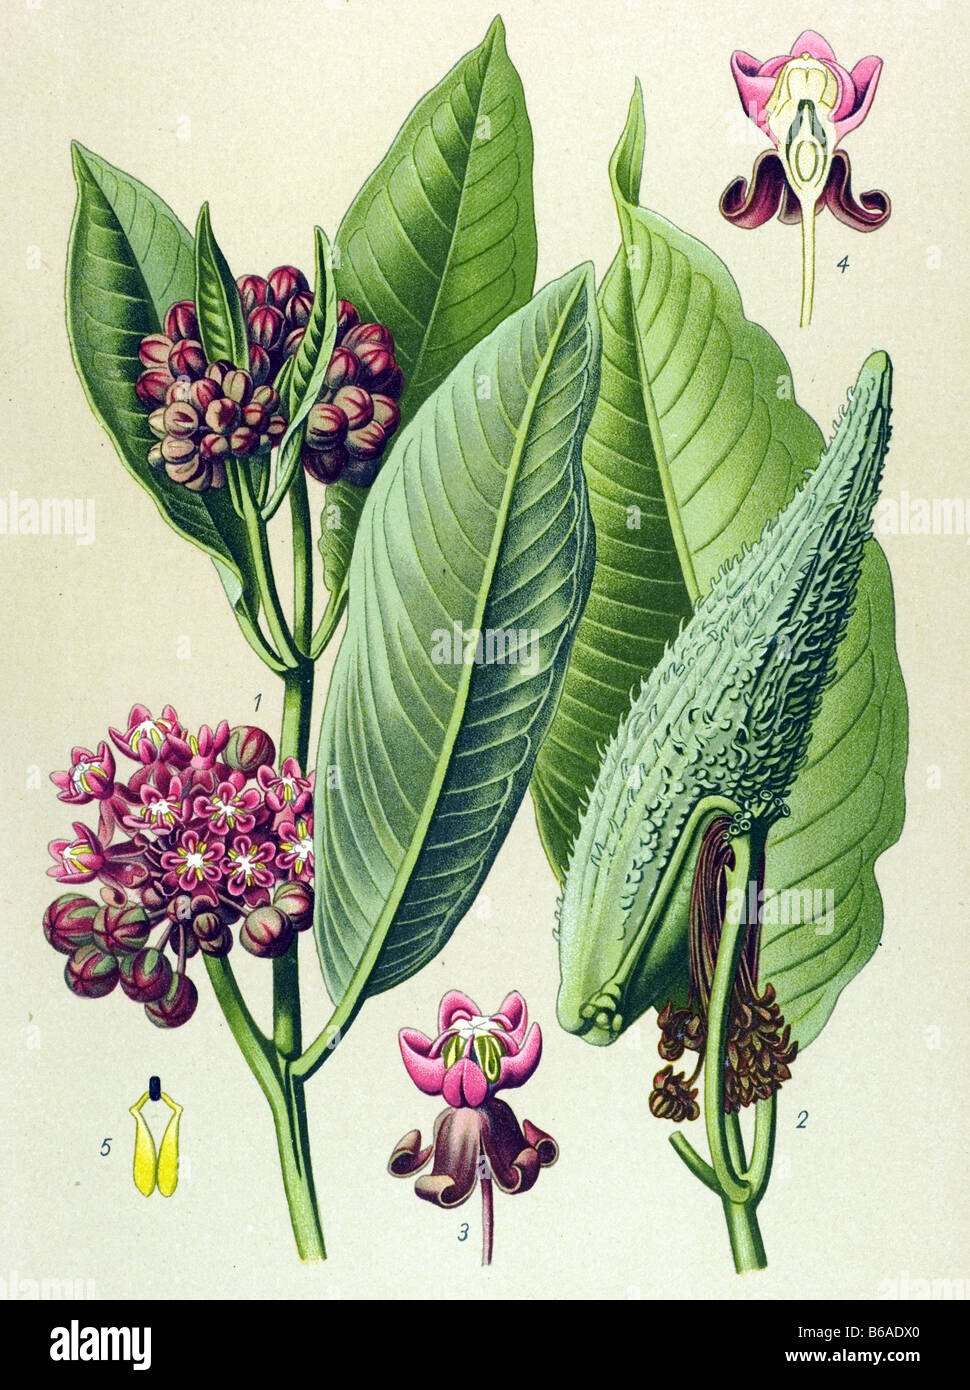 Milkweed, Asclepias Cornuti poisonous plants illustrations Stock Photo